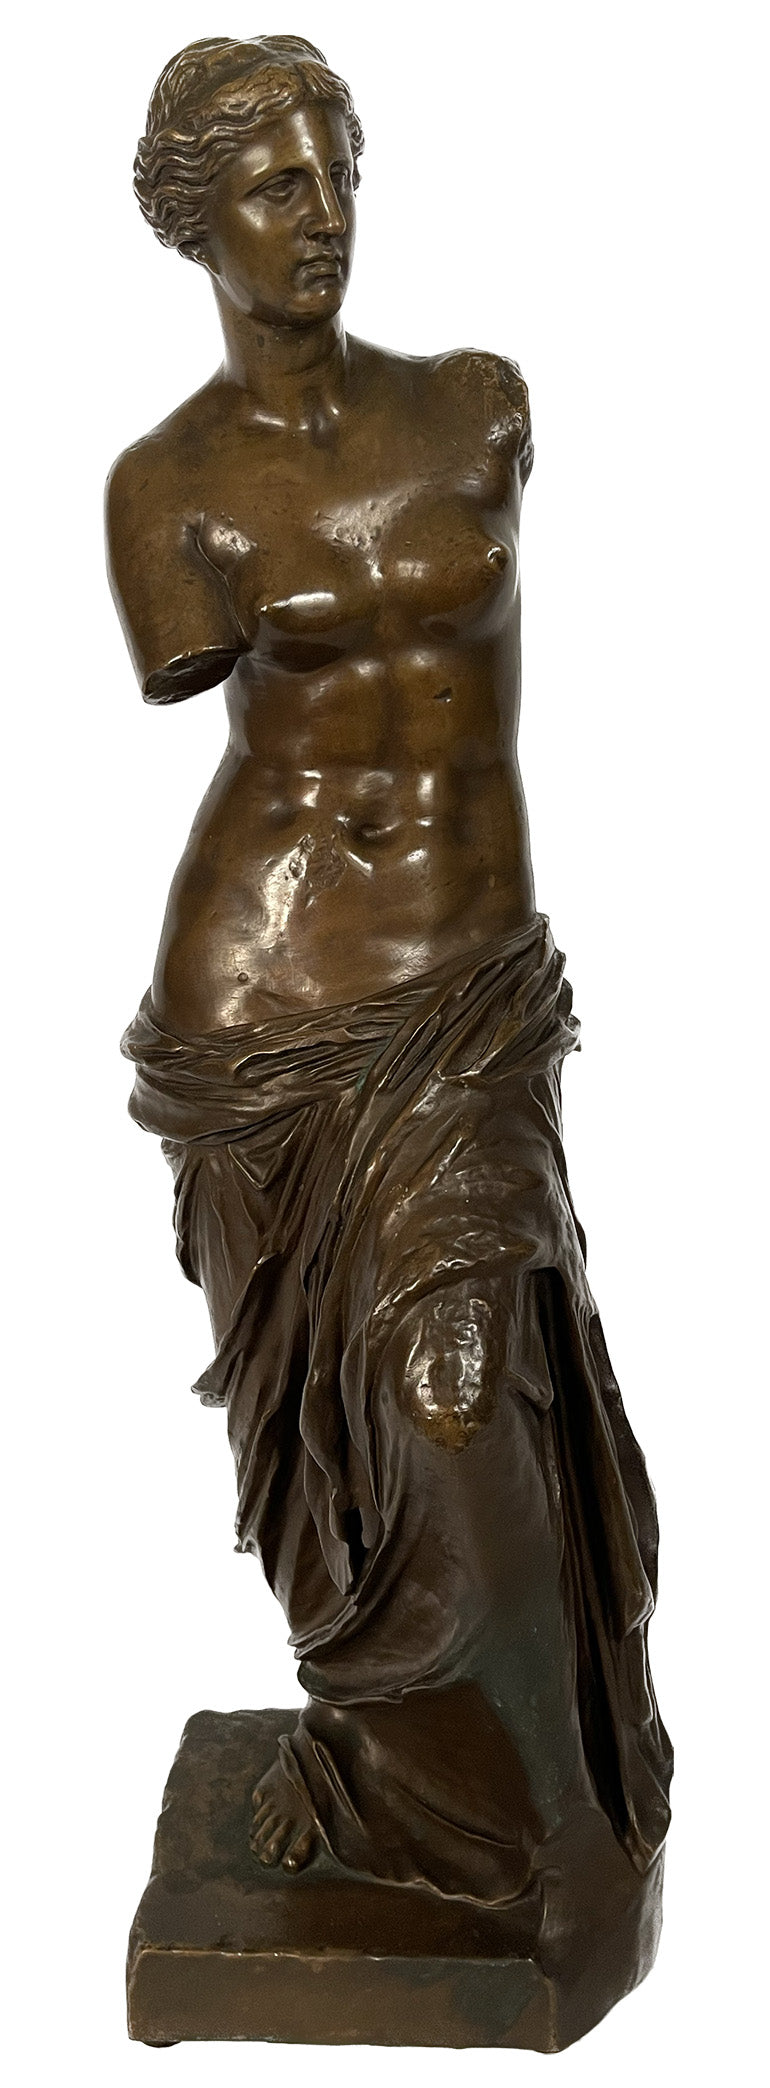 Venus de Milo by Ferdinand Barbedienne